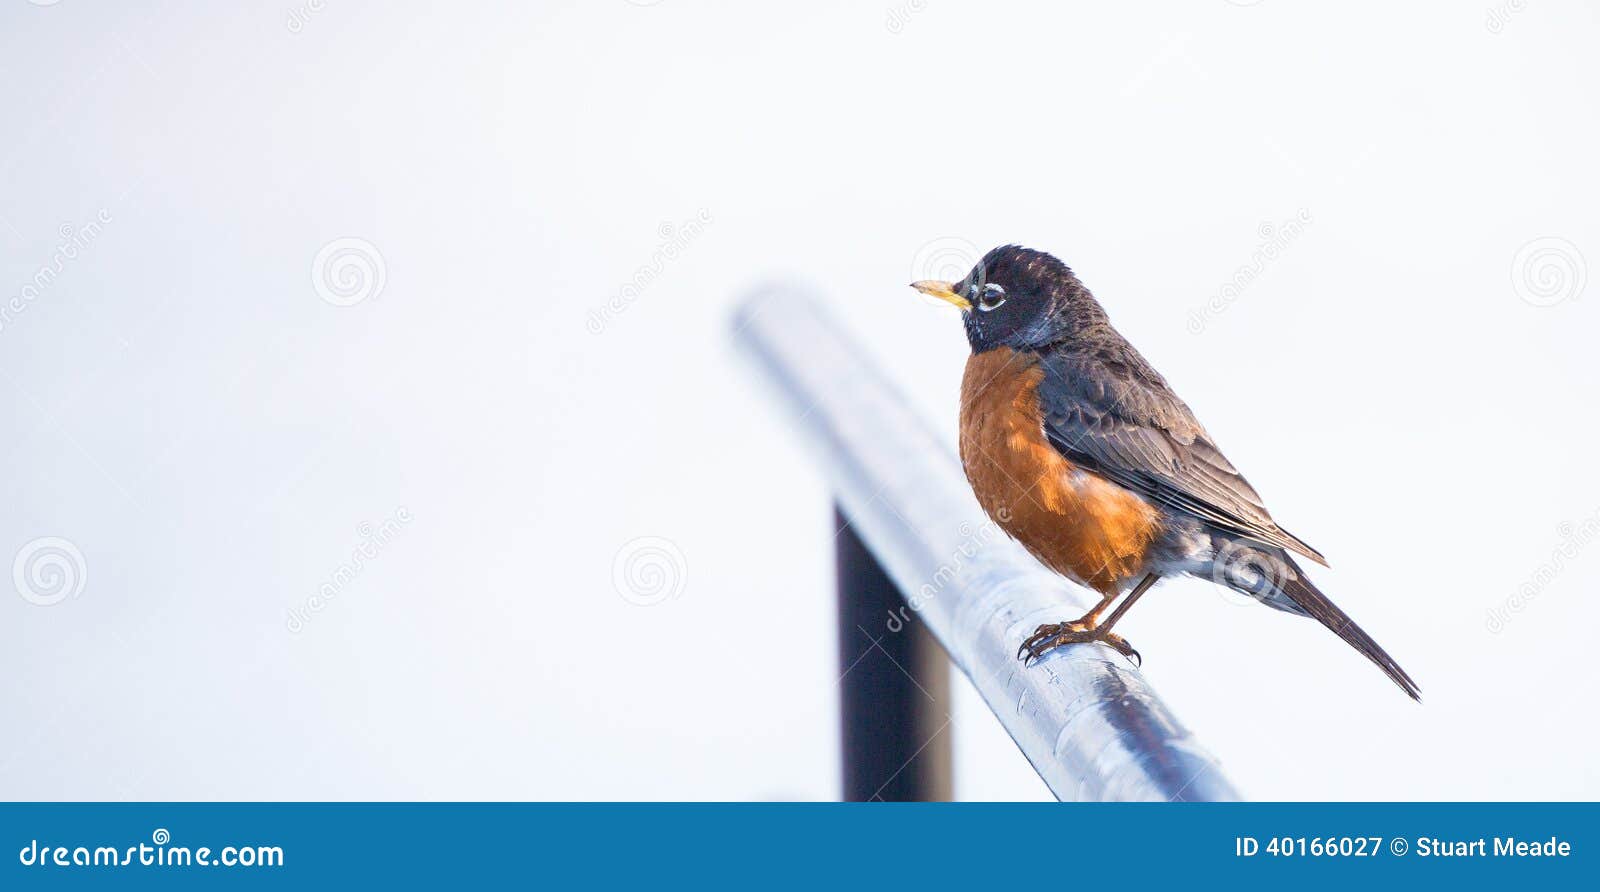 robin bird on railing